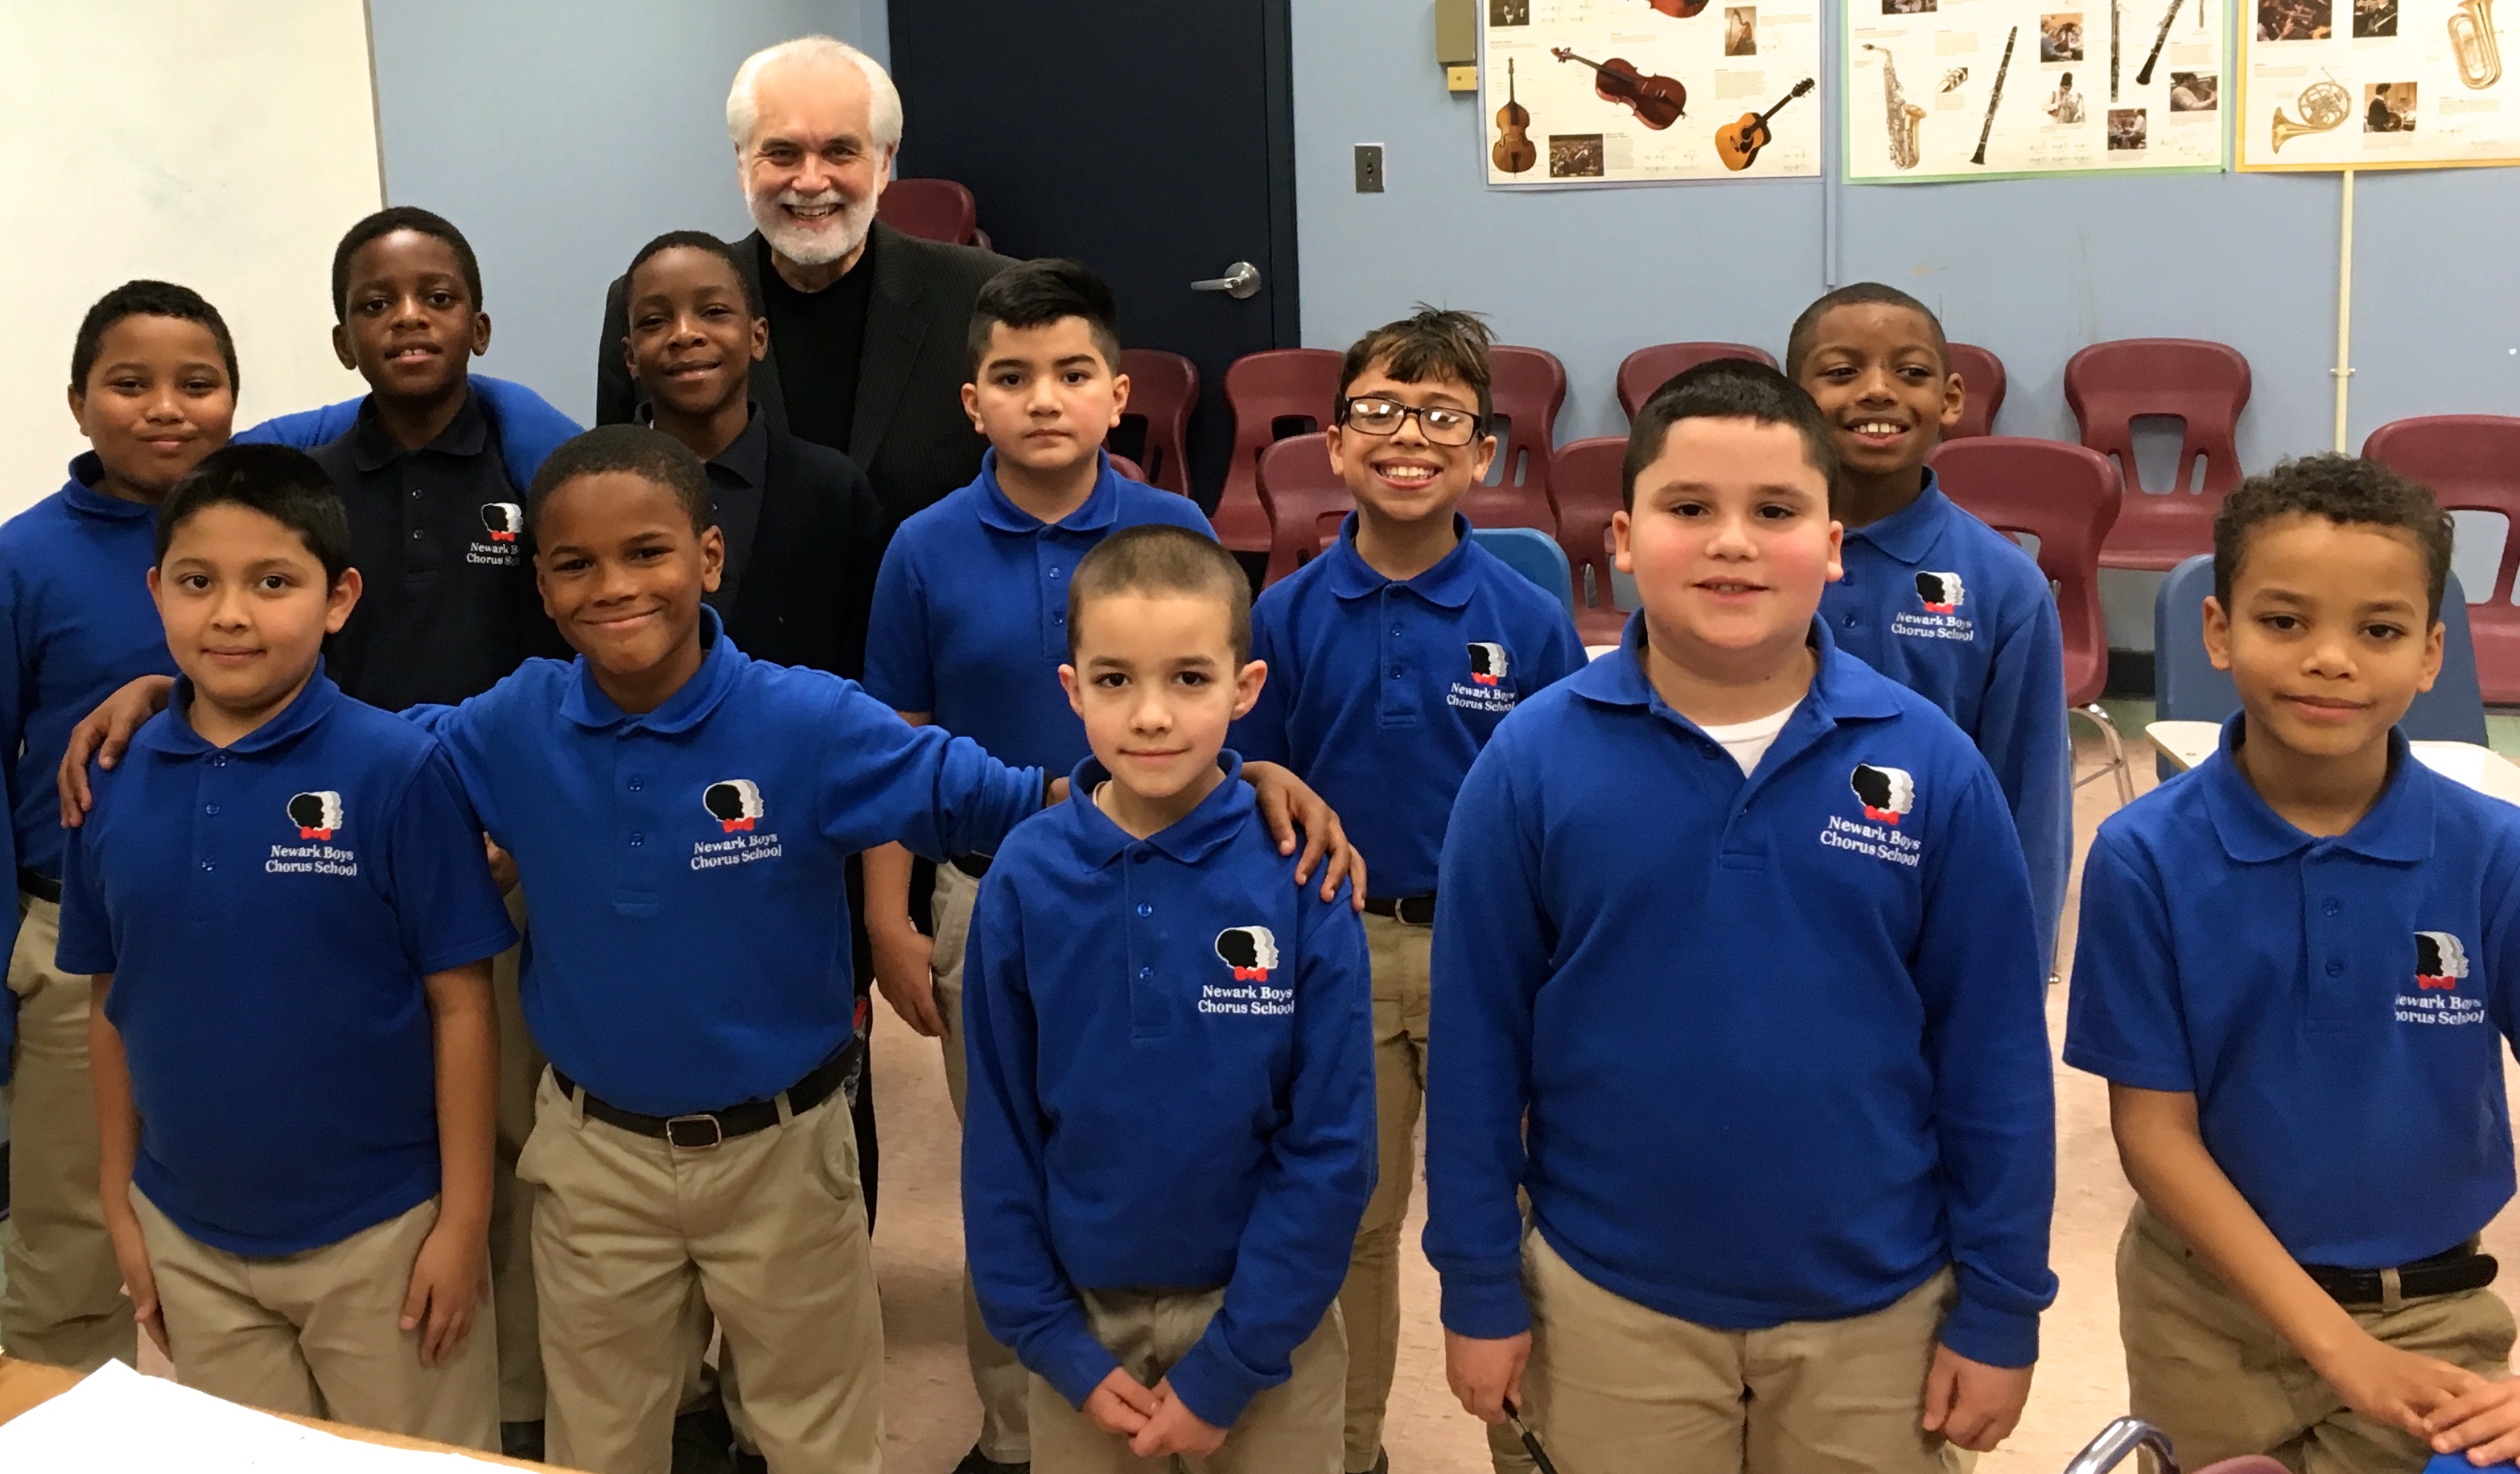 Newark Boys Chorus School